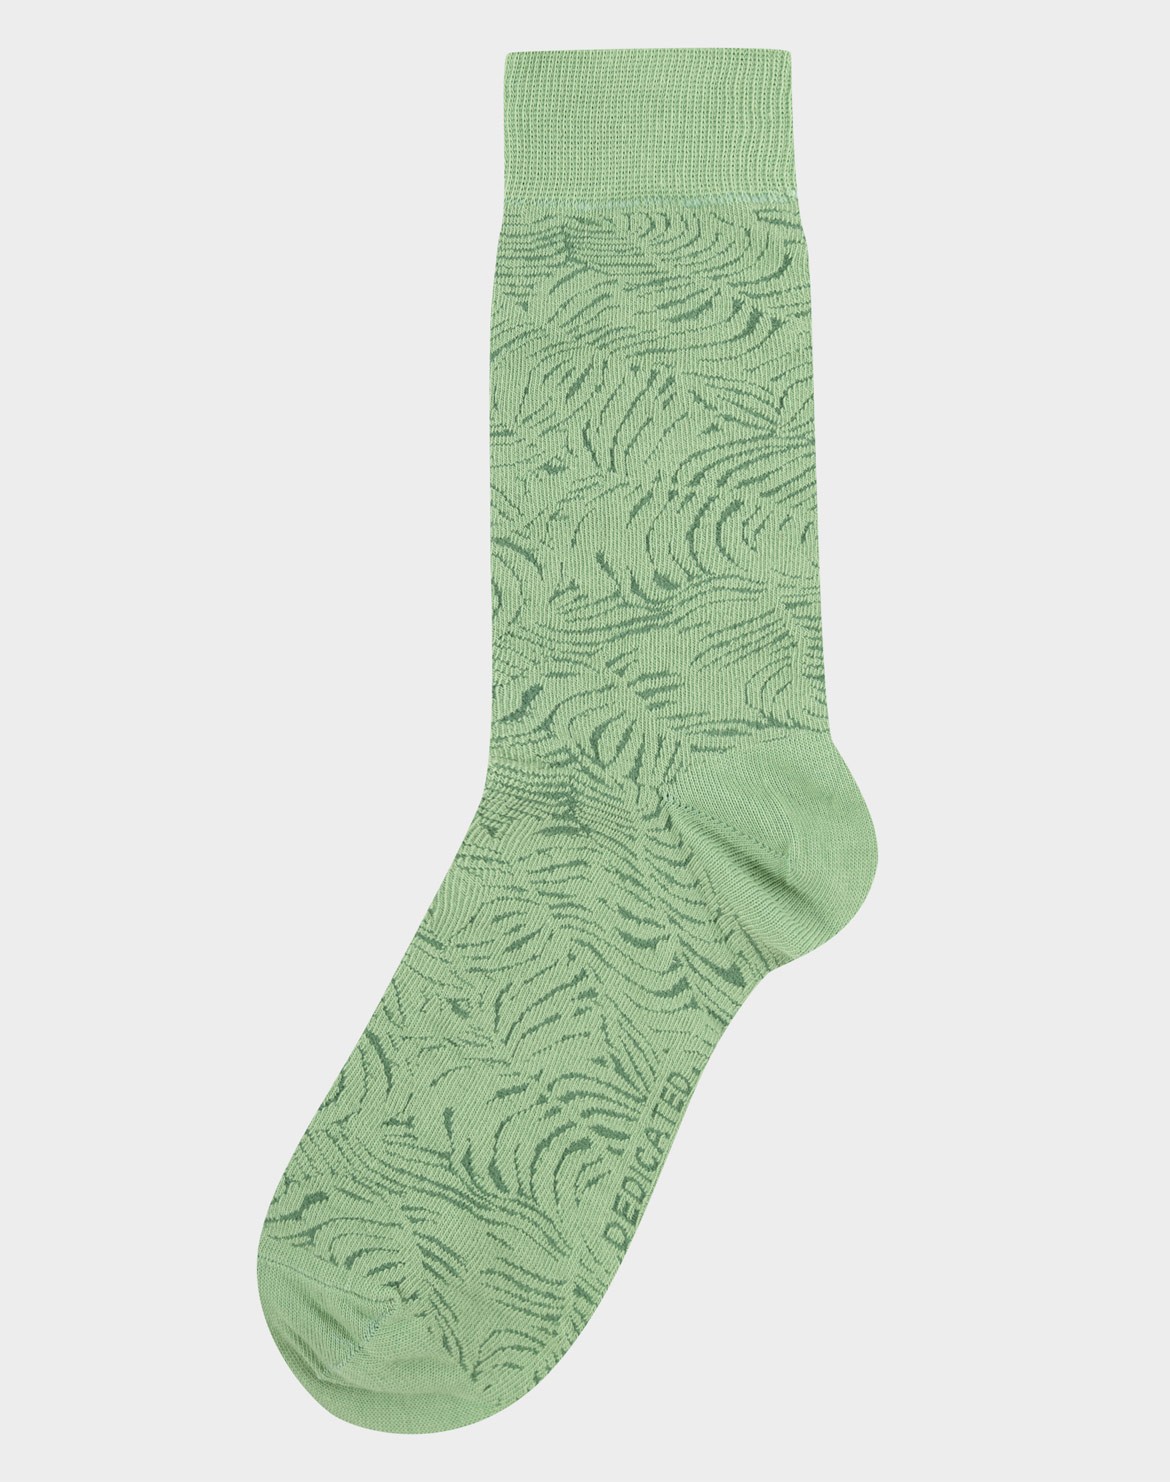 Palm Leaf Green Socken